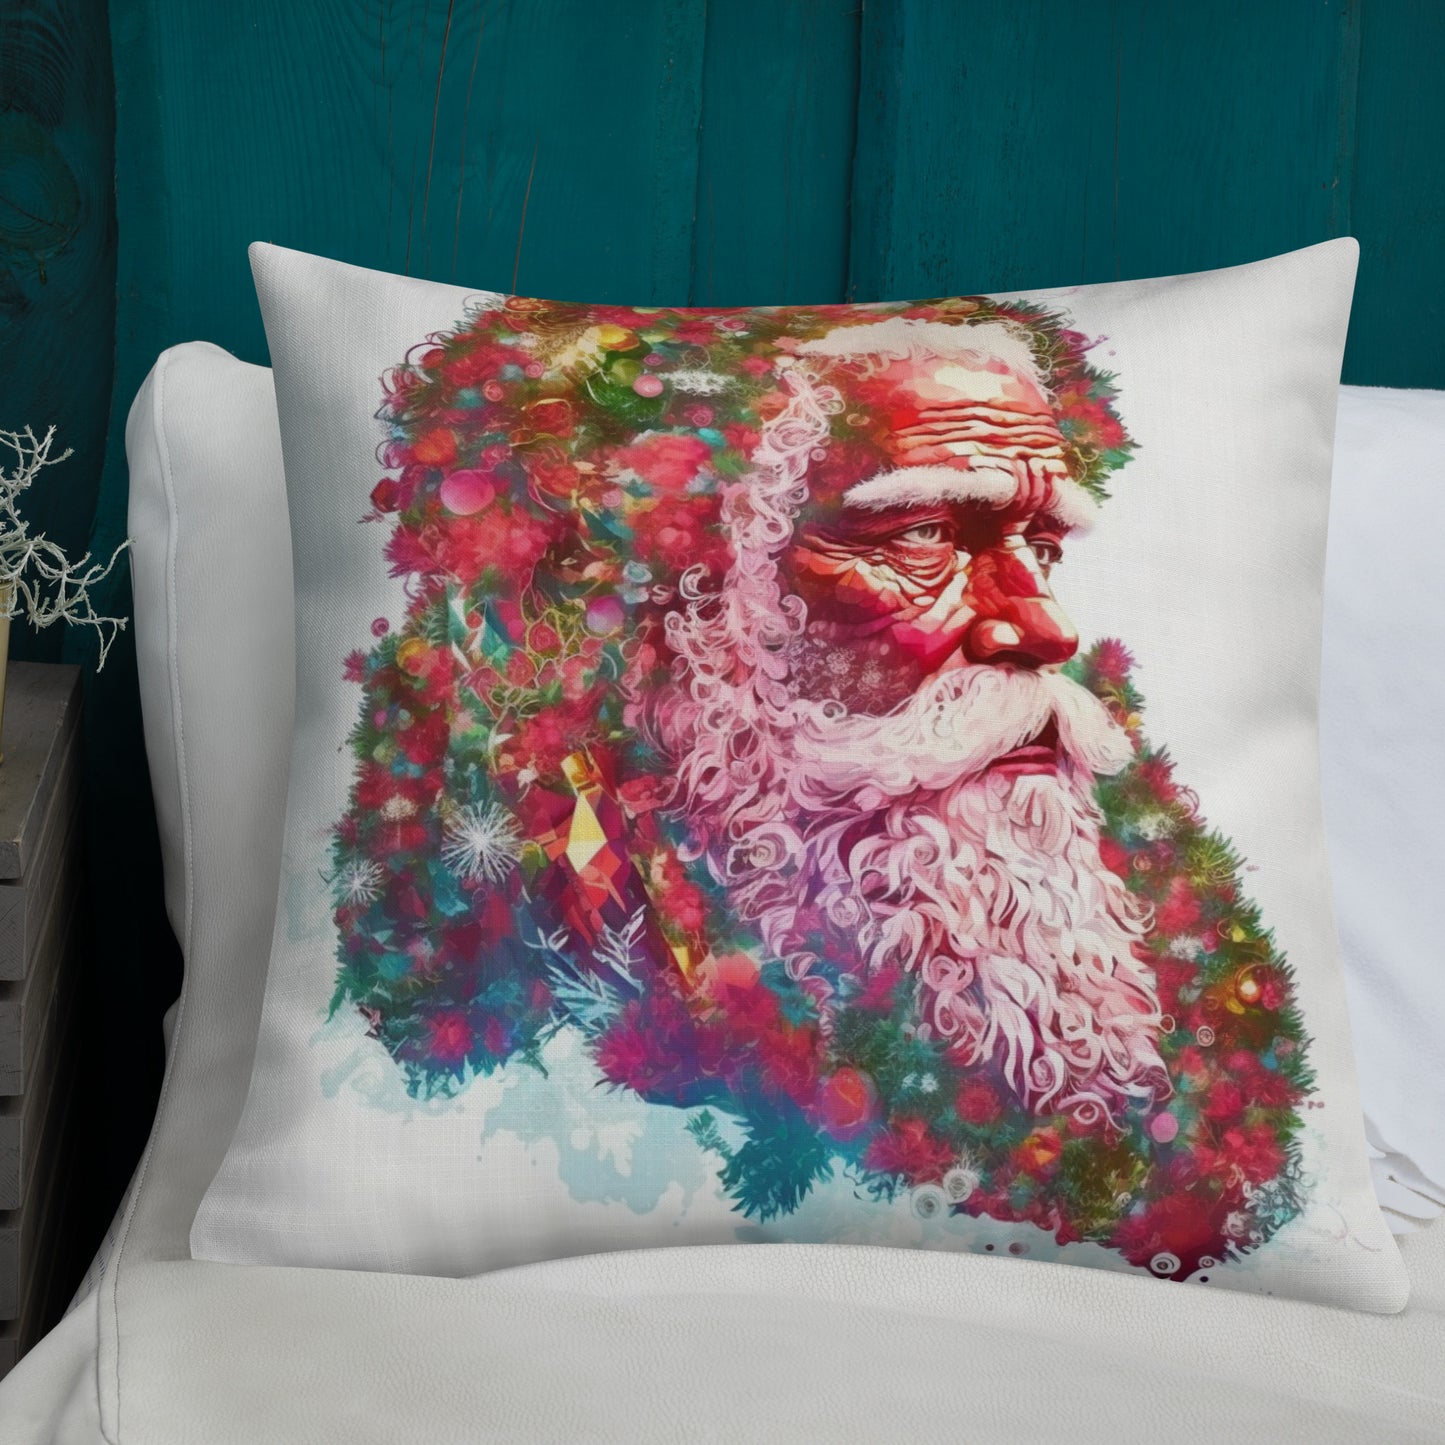 Neduz Designs Exposed Holidays Christmas Santa Claus Premium Pillow